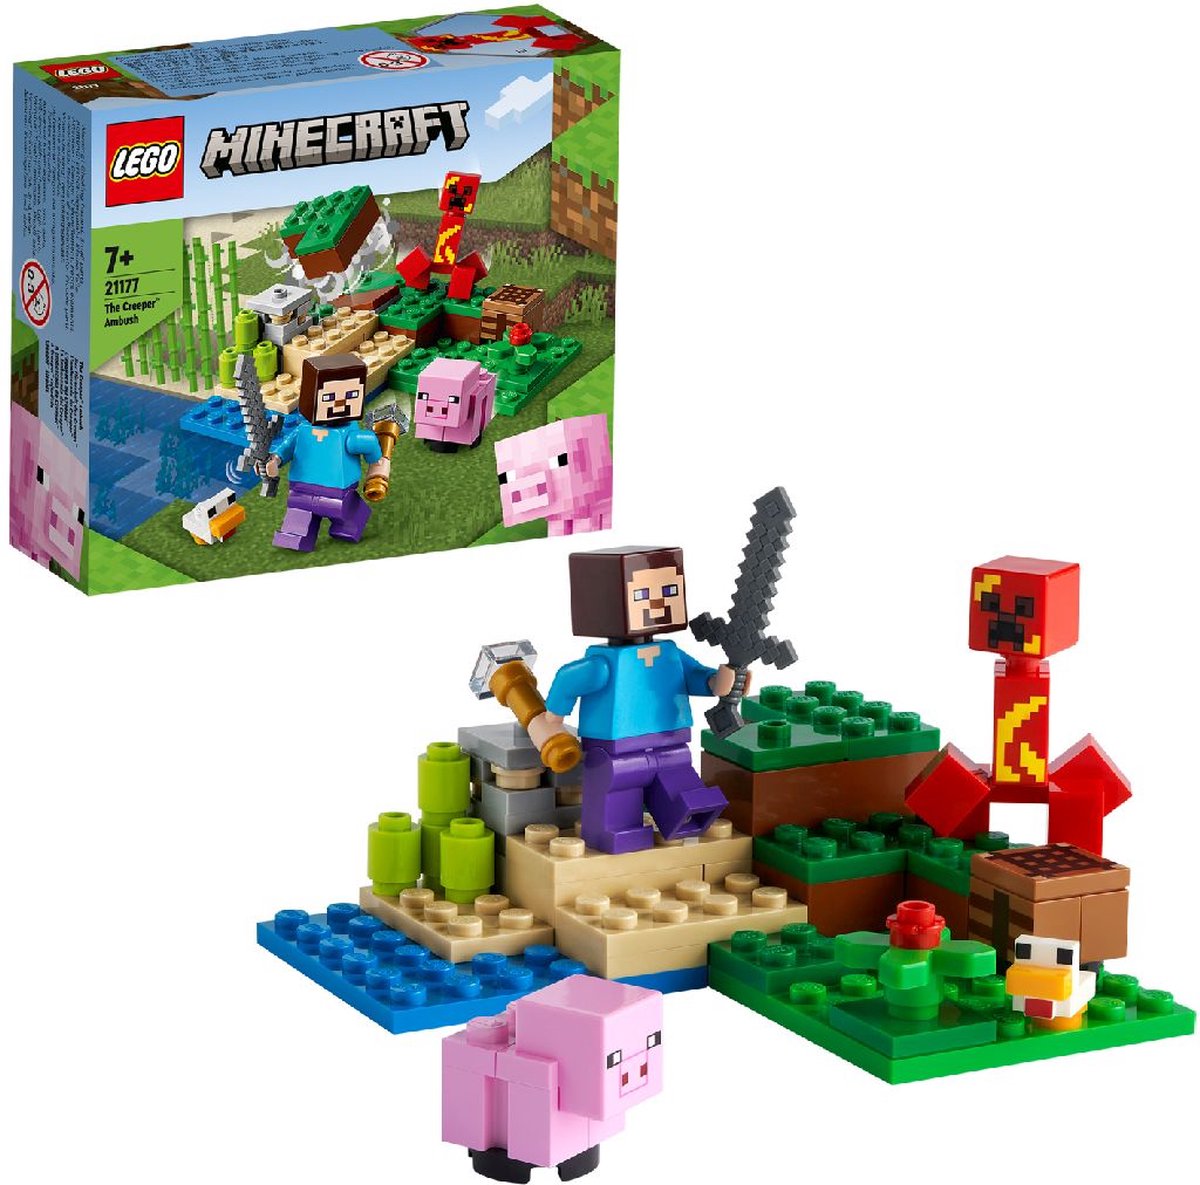 LEGO Minecraft 21178 pas cher, Le refuge renard